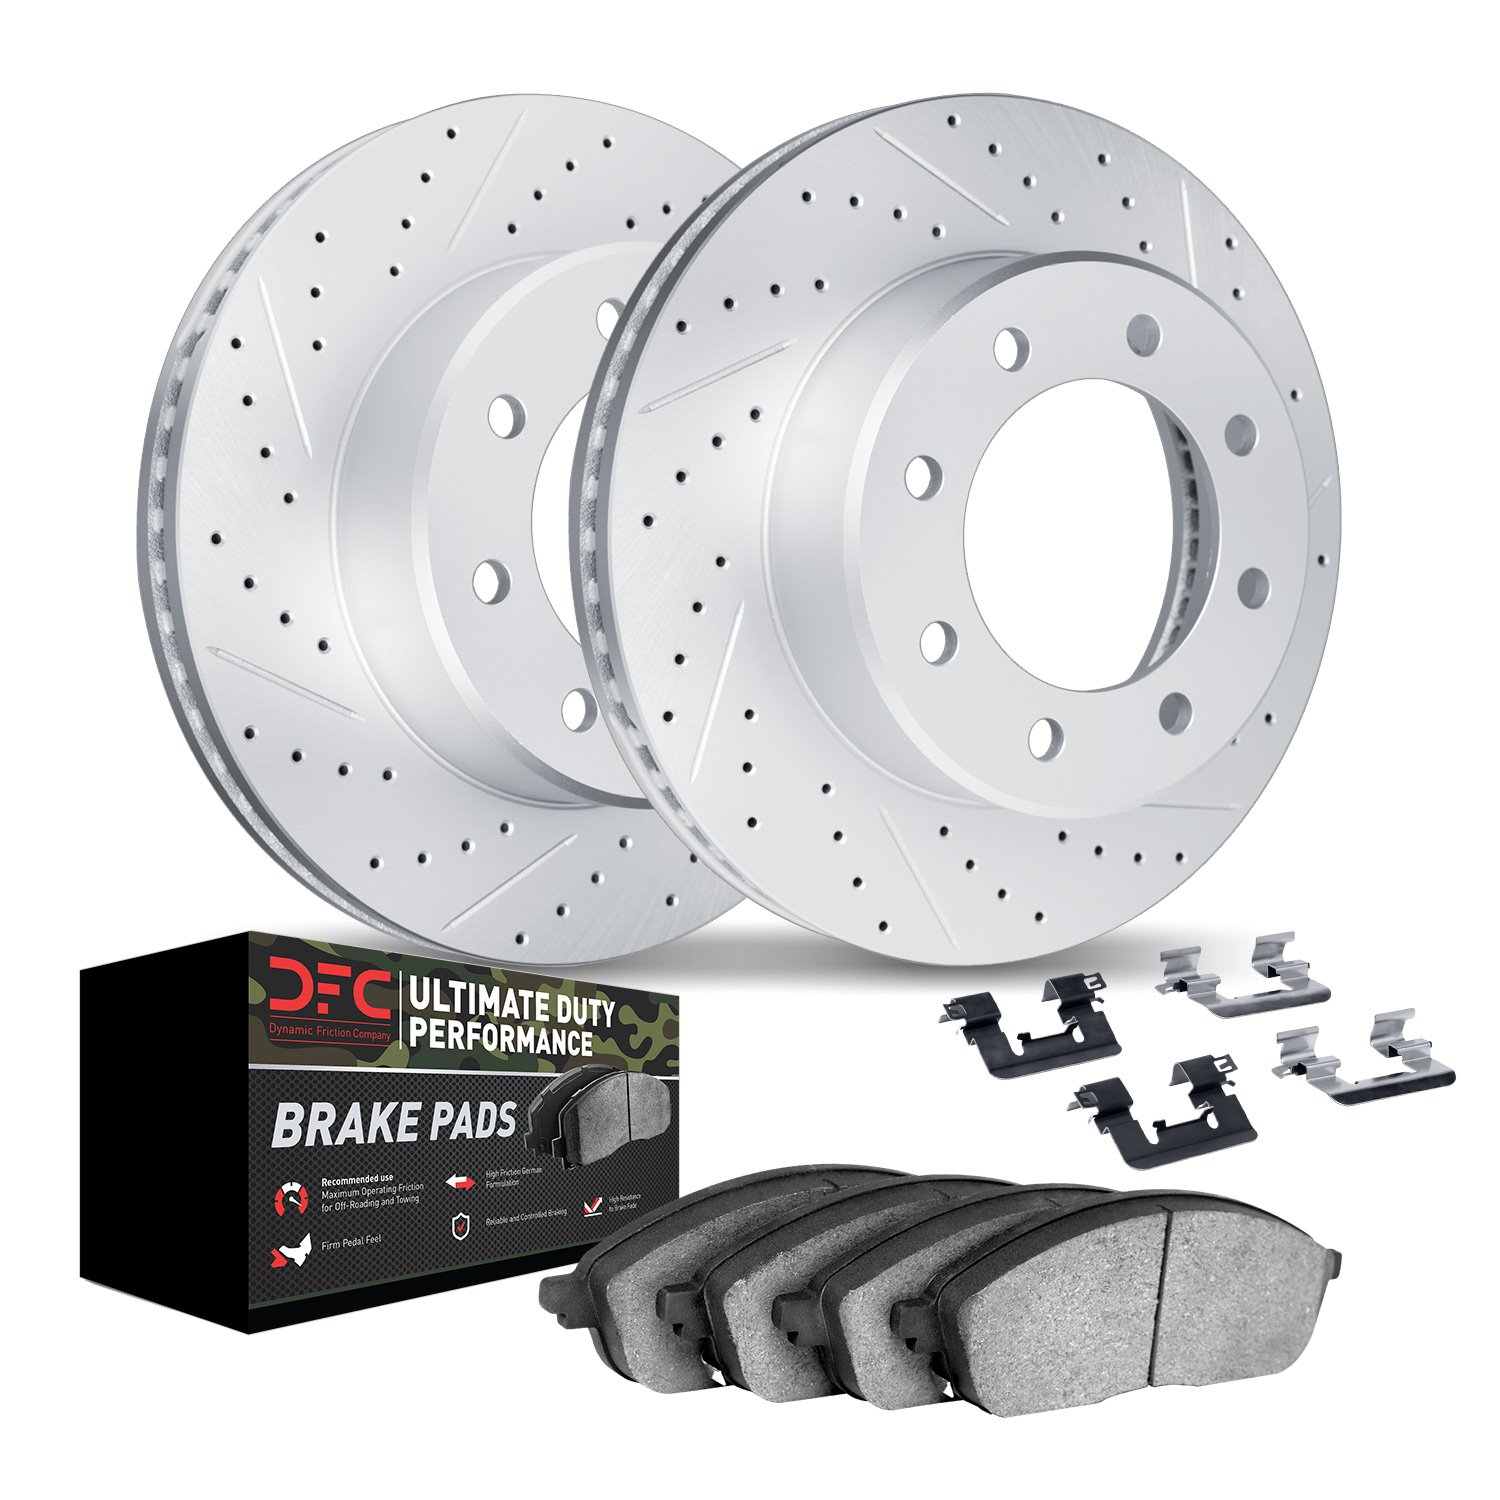 2412-67007 Geoperformance Drilled/Slotted Brake Rotors with Ultimate-Duty Brake Pads Kit & Hardware, 2012-2021 Infiniti/Nissan,